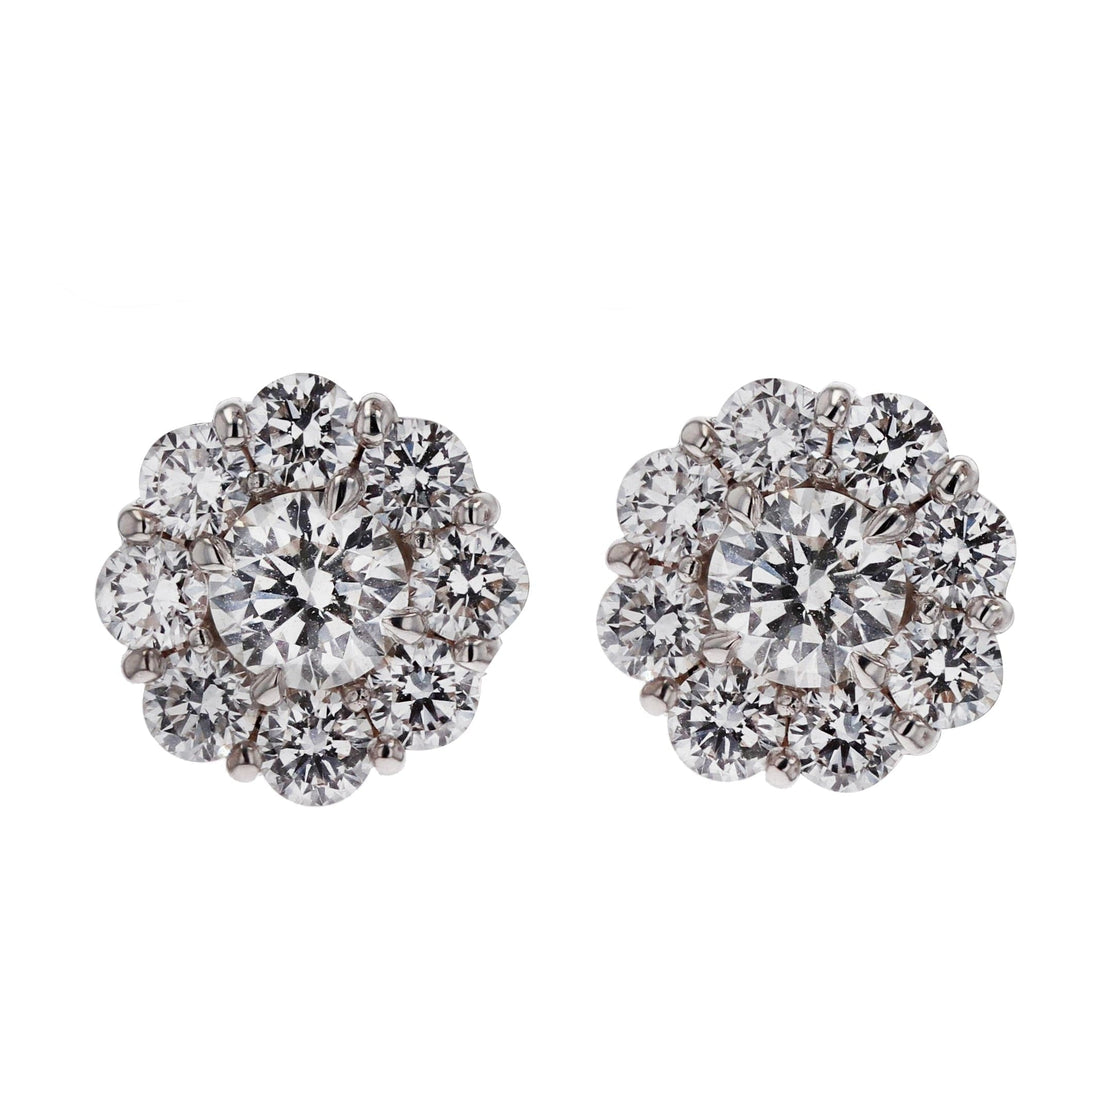 Skeie's Legacy Collection Diamond Cluster Stud Earrings in White Gold - Skeie's Jewelers